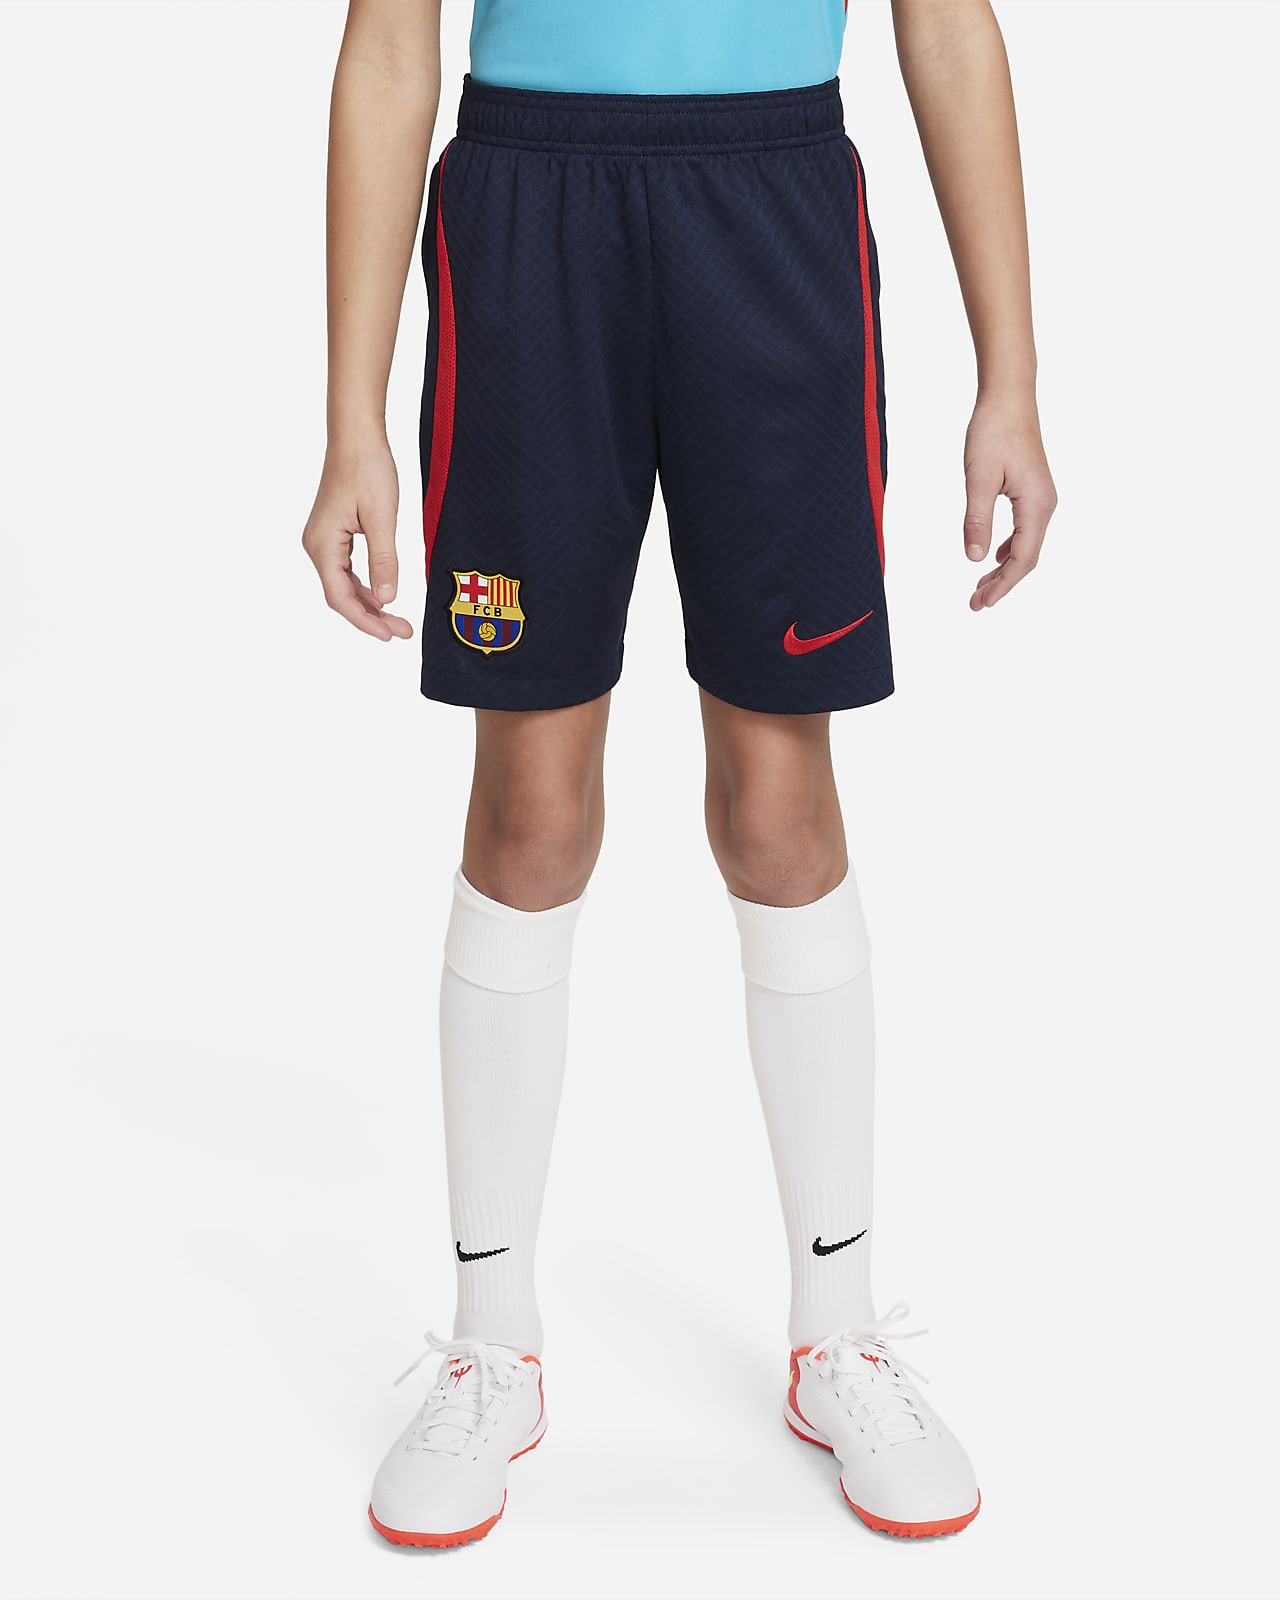 tomar Vibrar Mal uso Shorts de fútbol Nike Dri-FIT para niños talla grande FC Barcelona Strike.  Nike.com